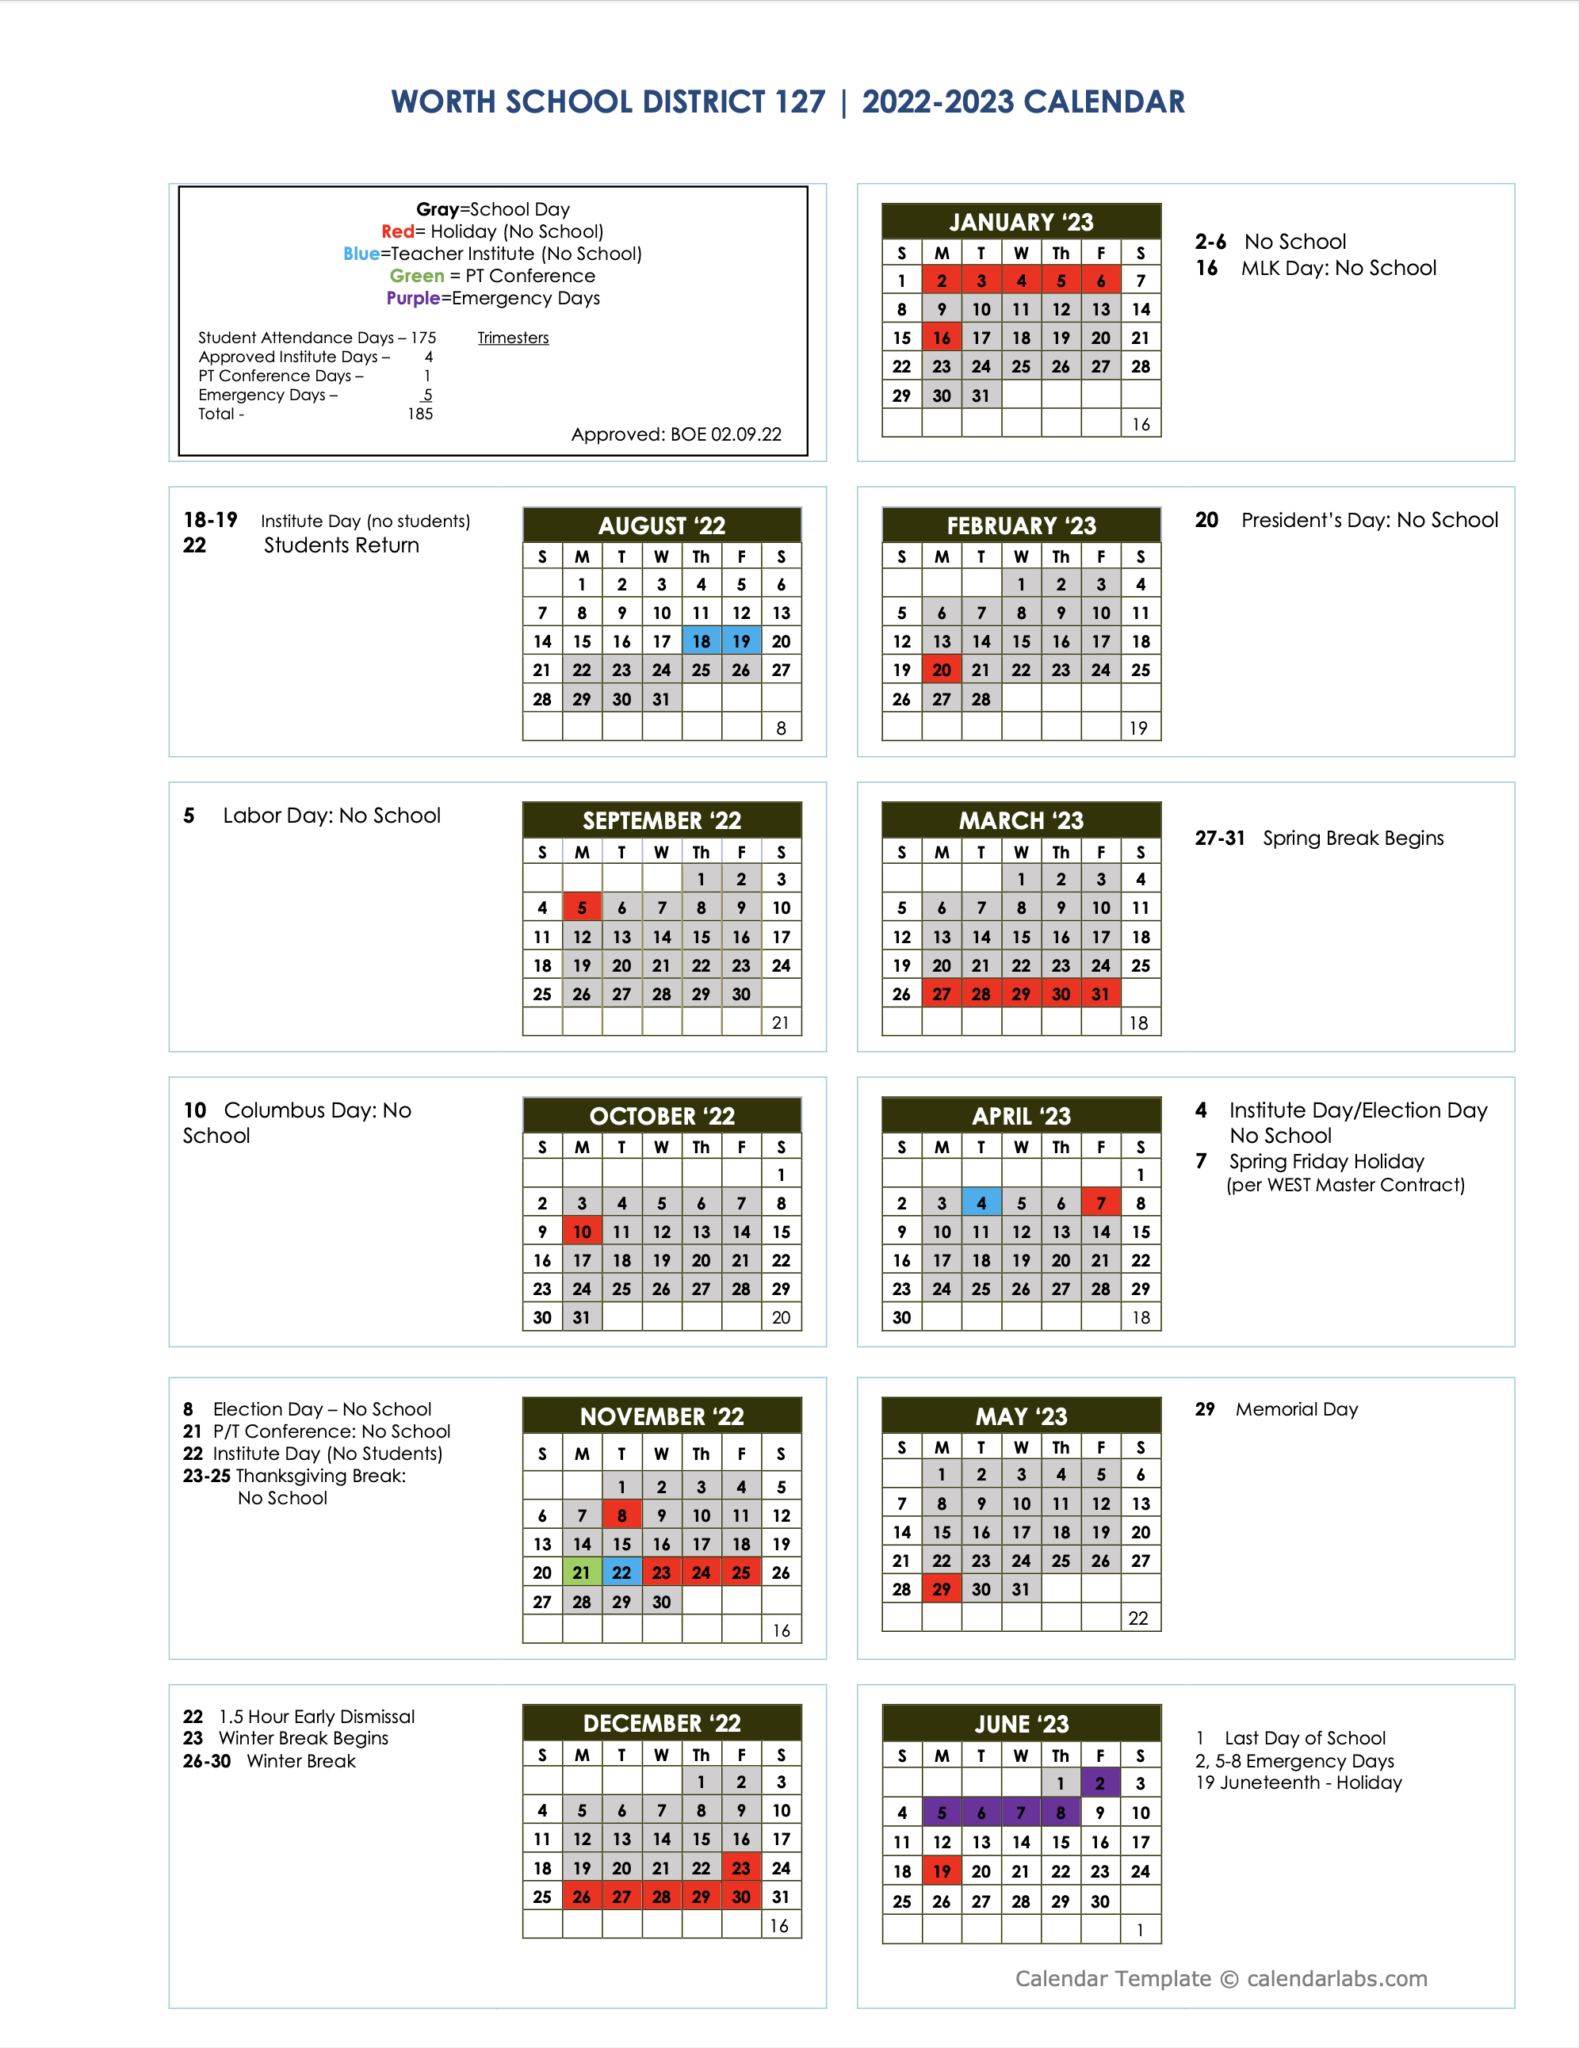 School Calendar to Worth School District 127